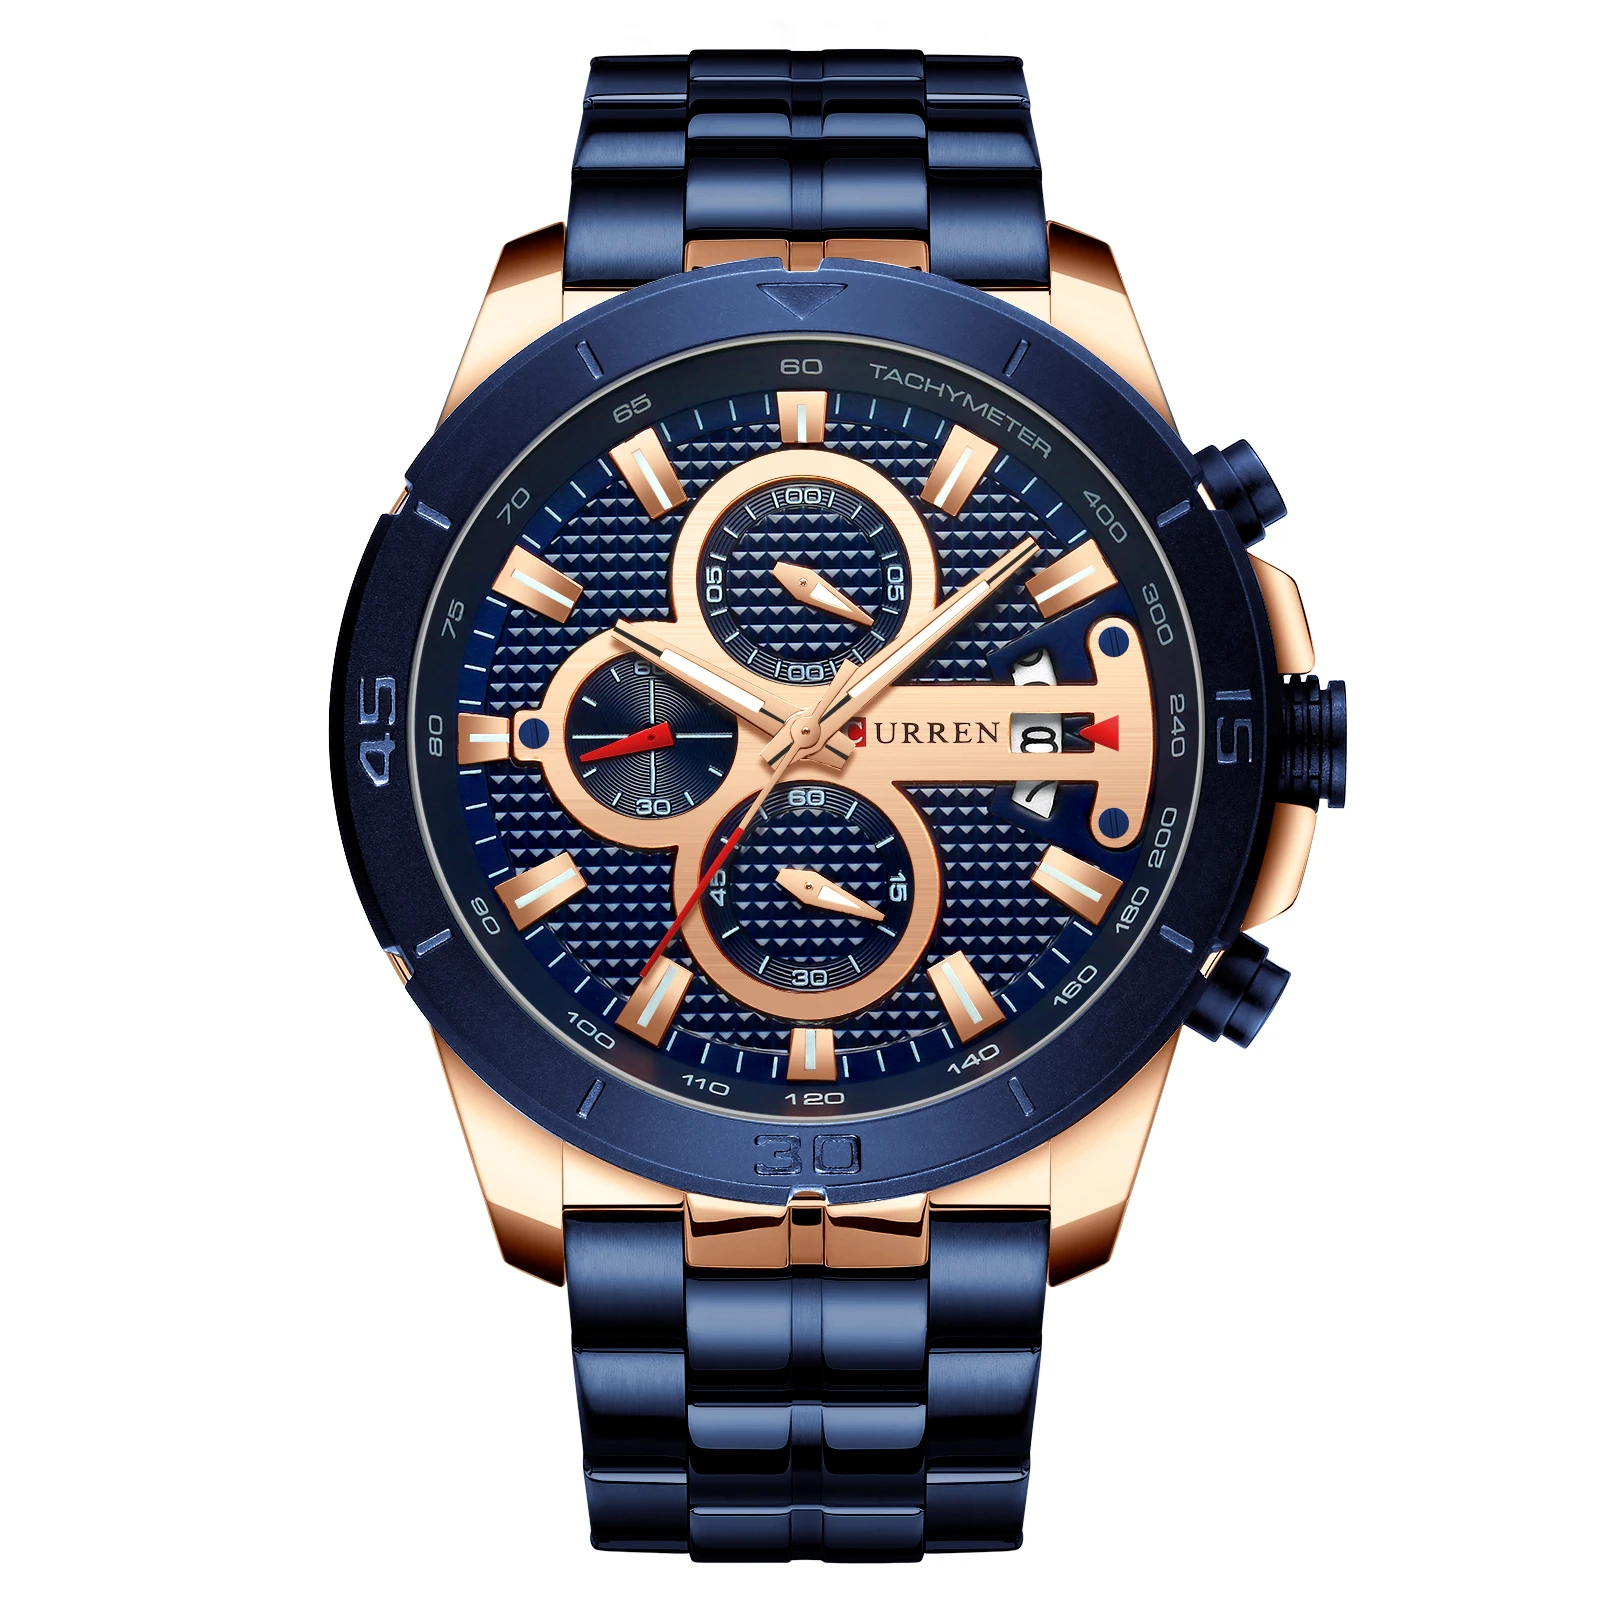 

CURREN 8337 Men Watch Luxury Brand Stainless Steel Wrist Watch Chronograph Army Military Quartz Watches Relogio Masculino